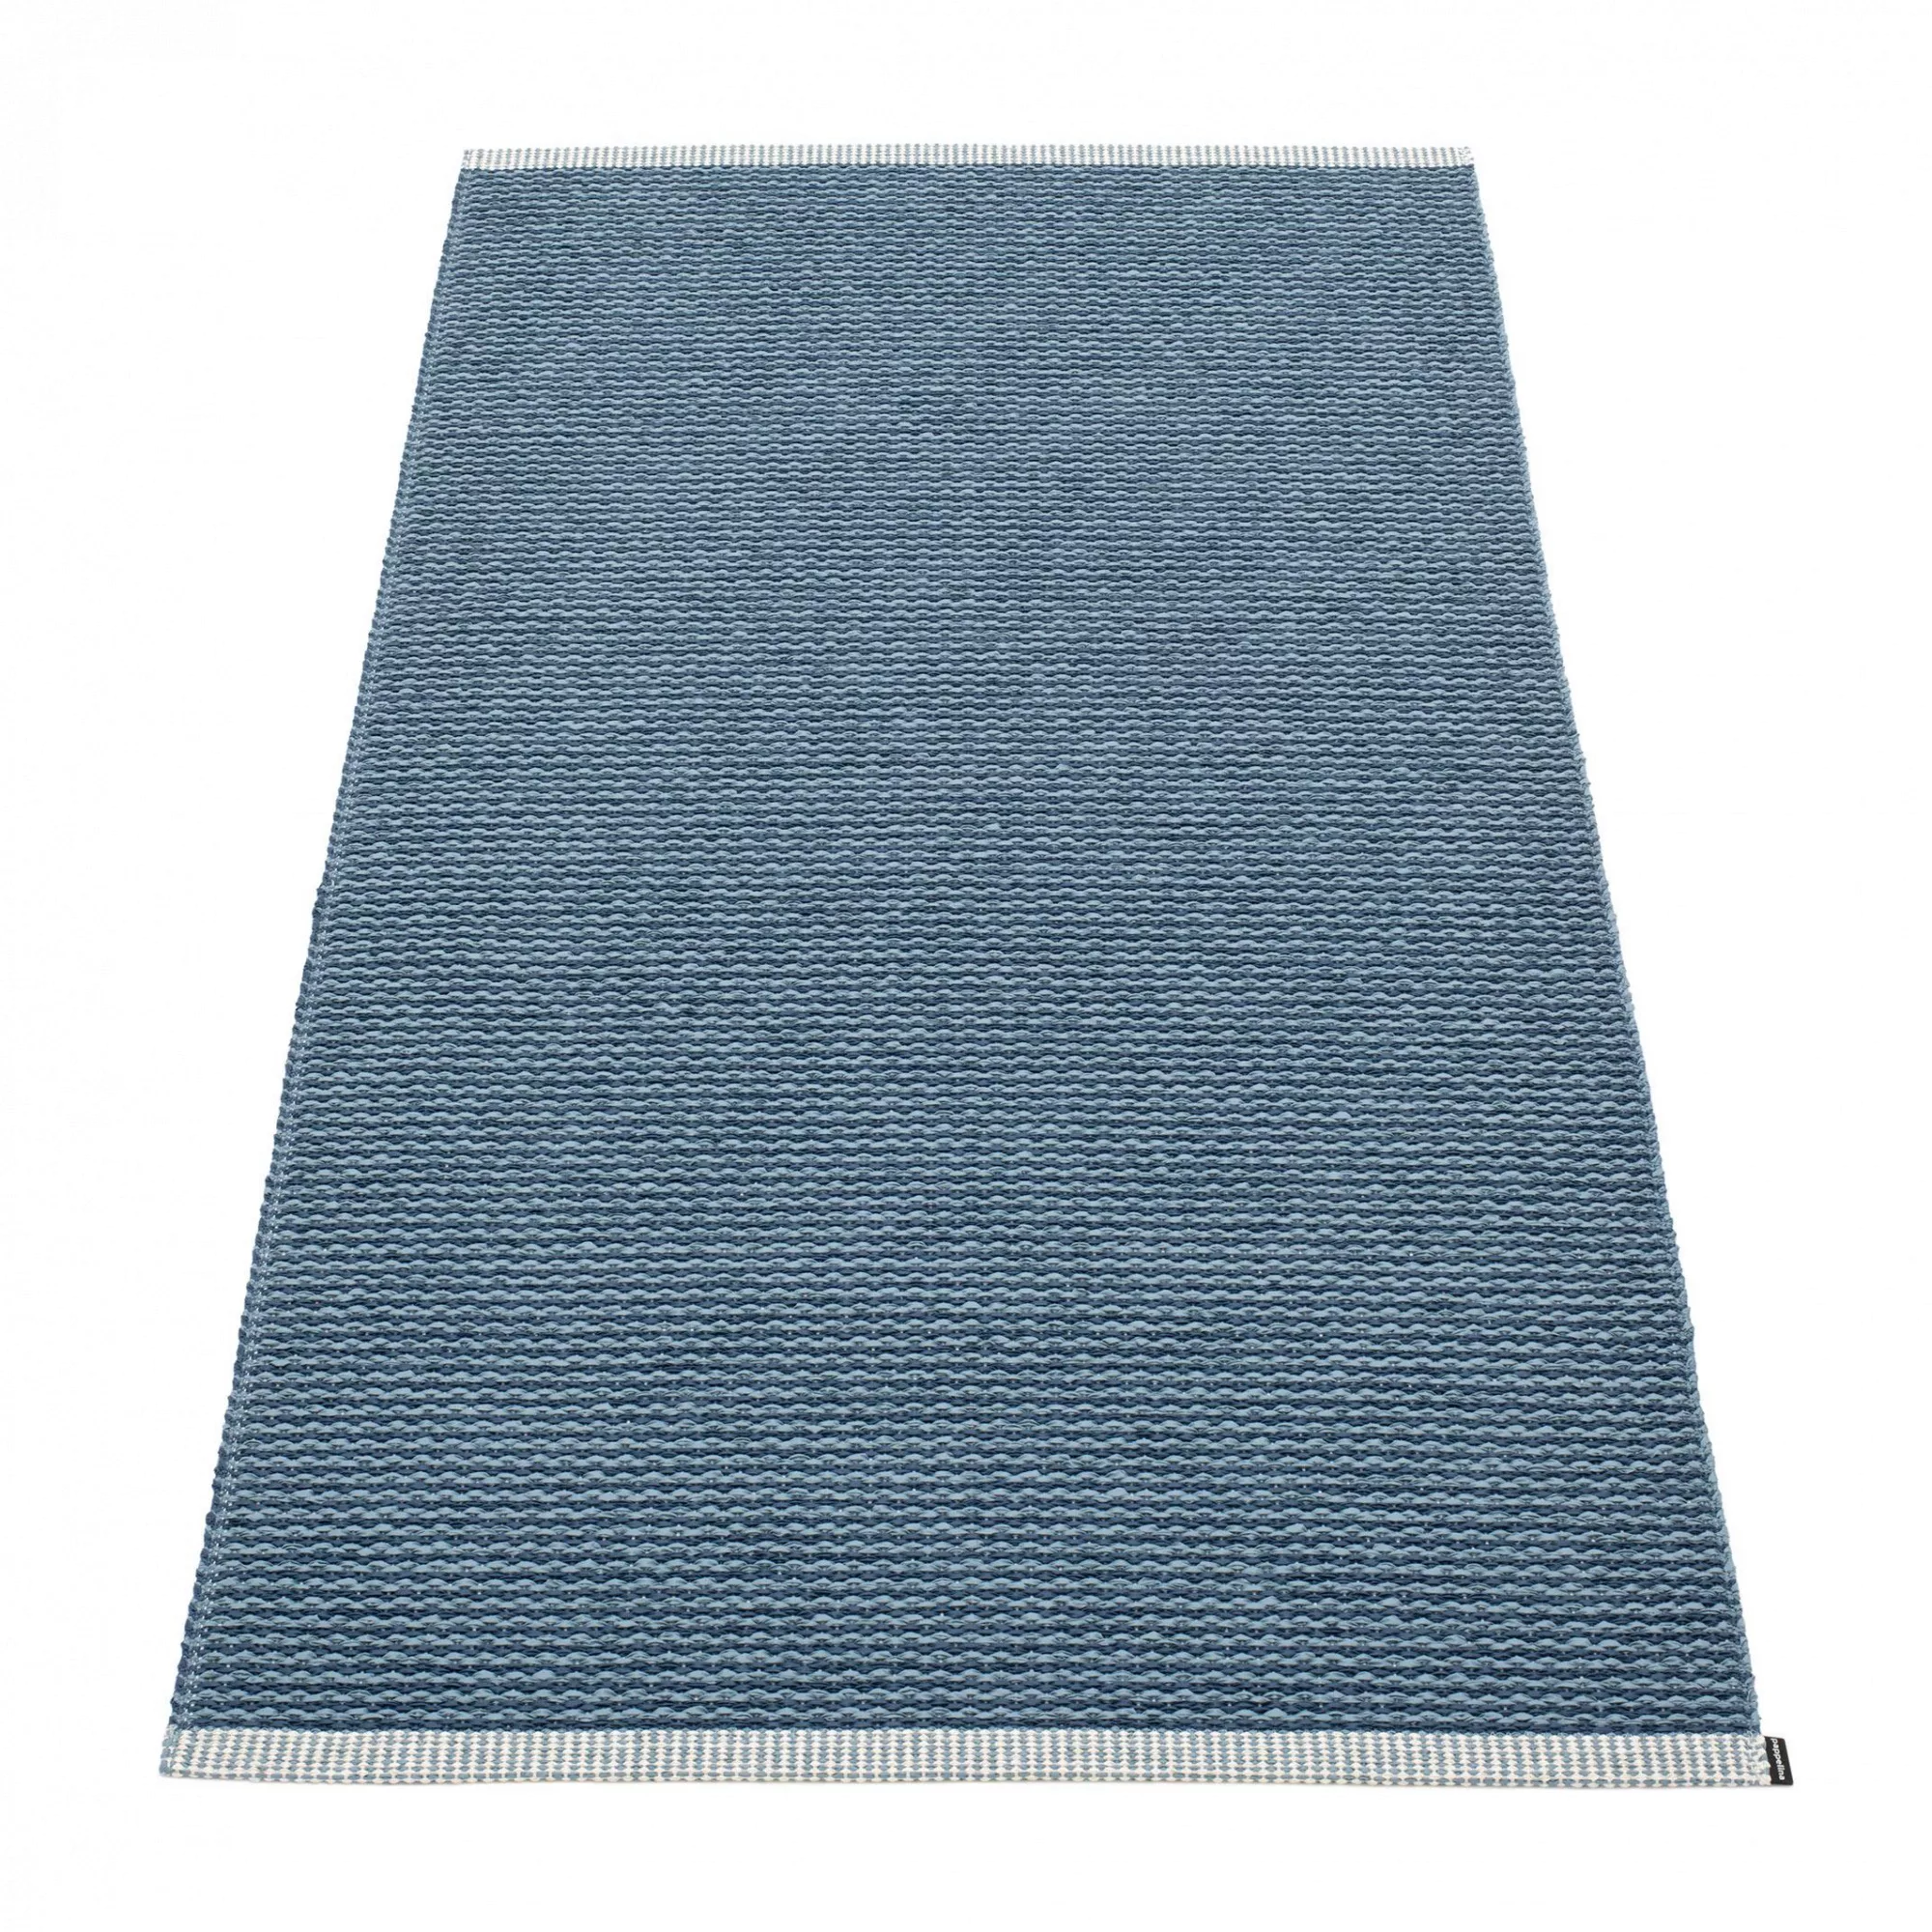 pappelina - Mono Teppich 85x160cm - ozeanblau - taubenblau/PVC phthalatfrei günstig online kaufen